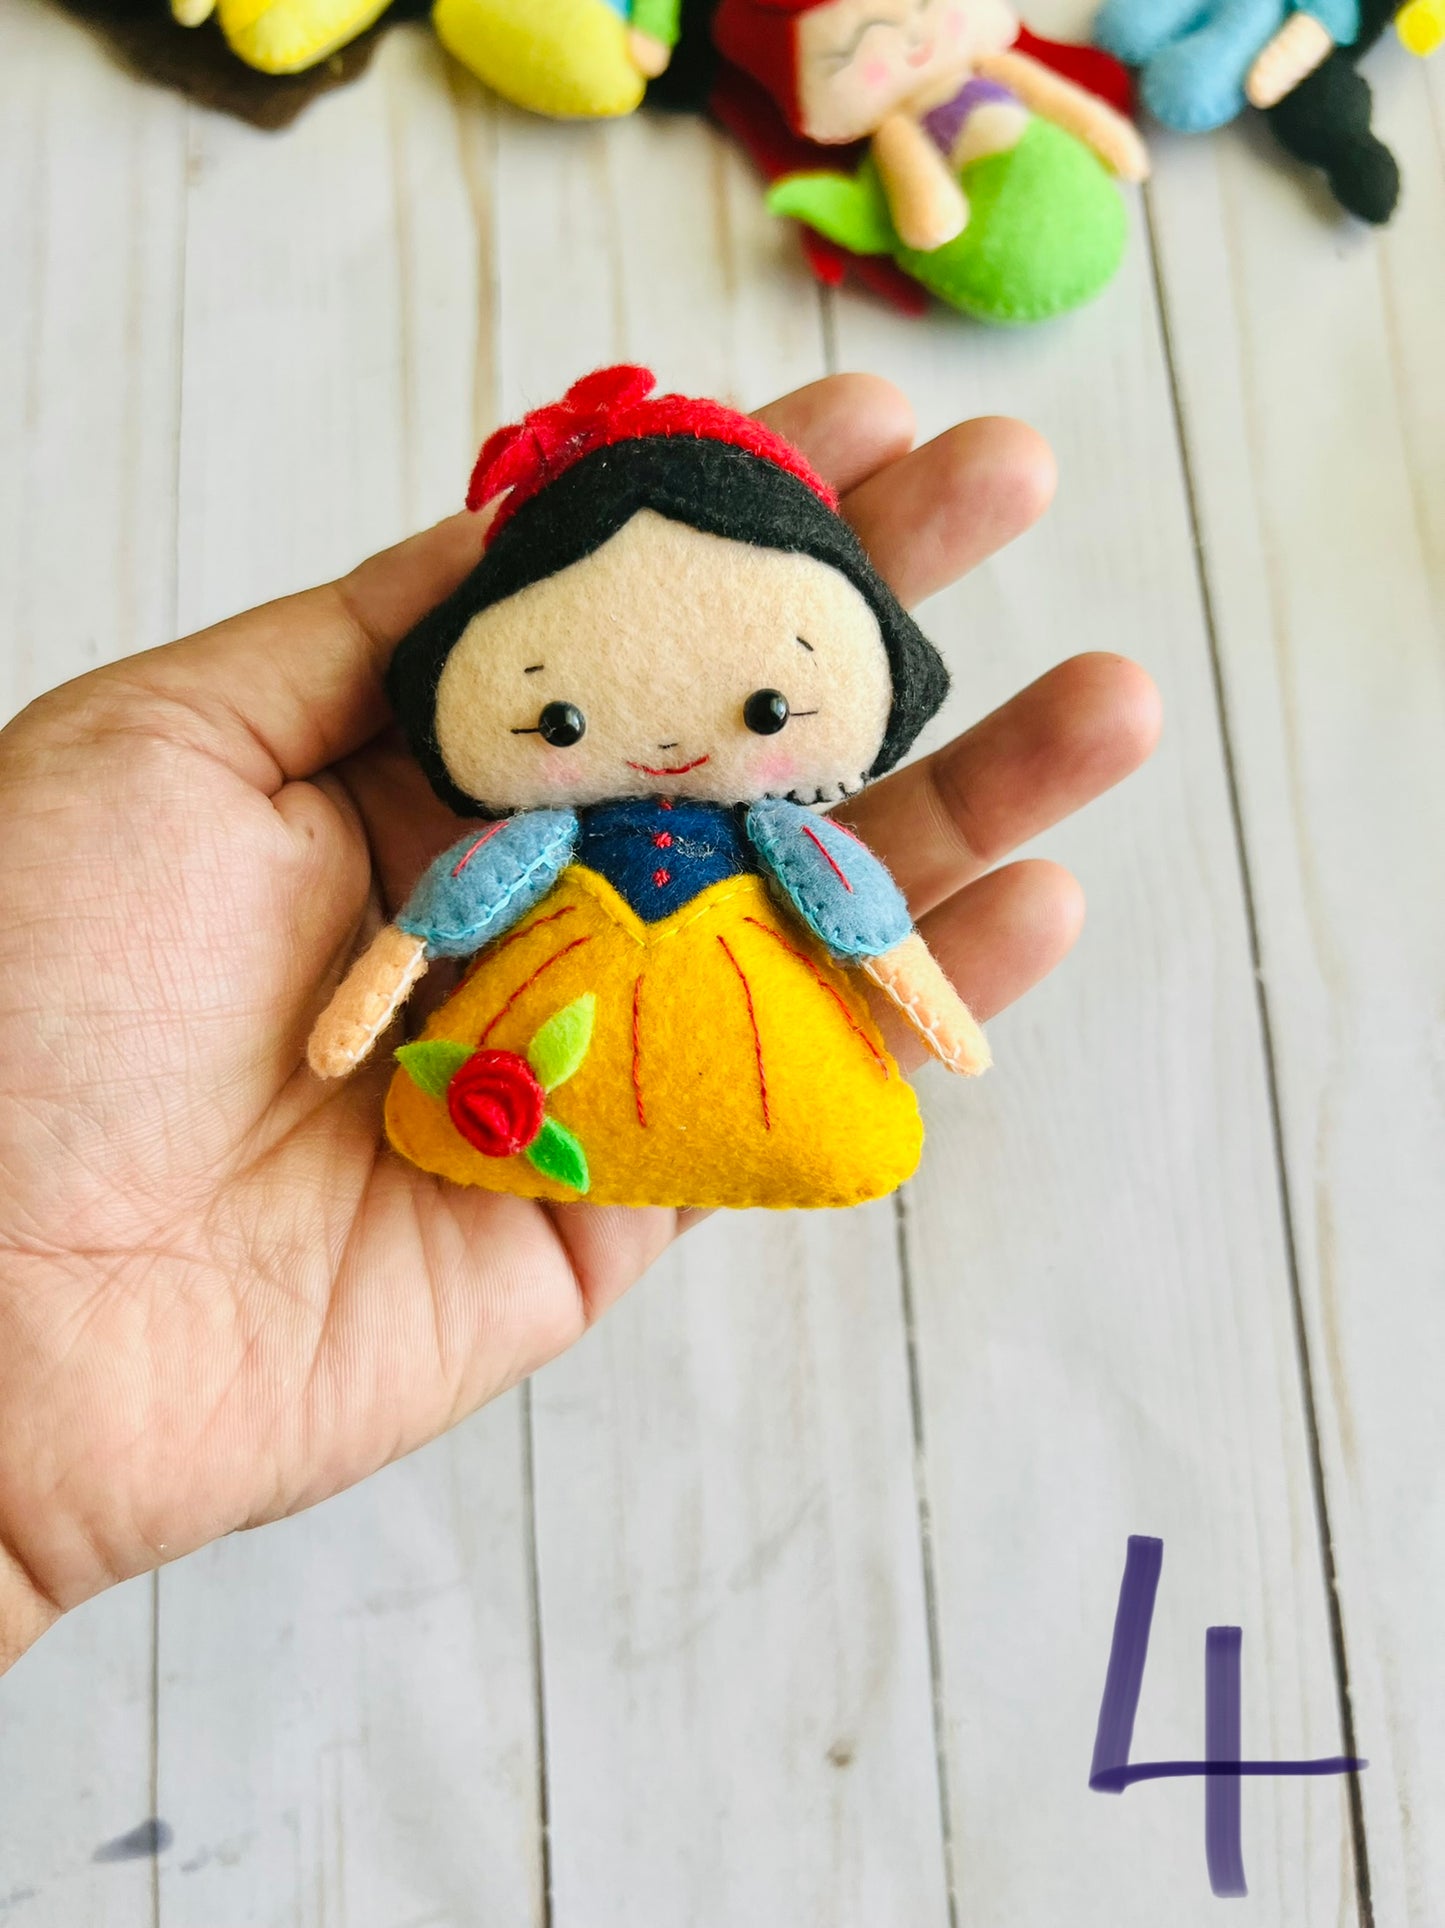 Princess ornaments / finger puppets